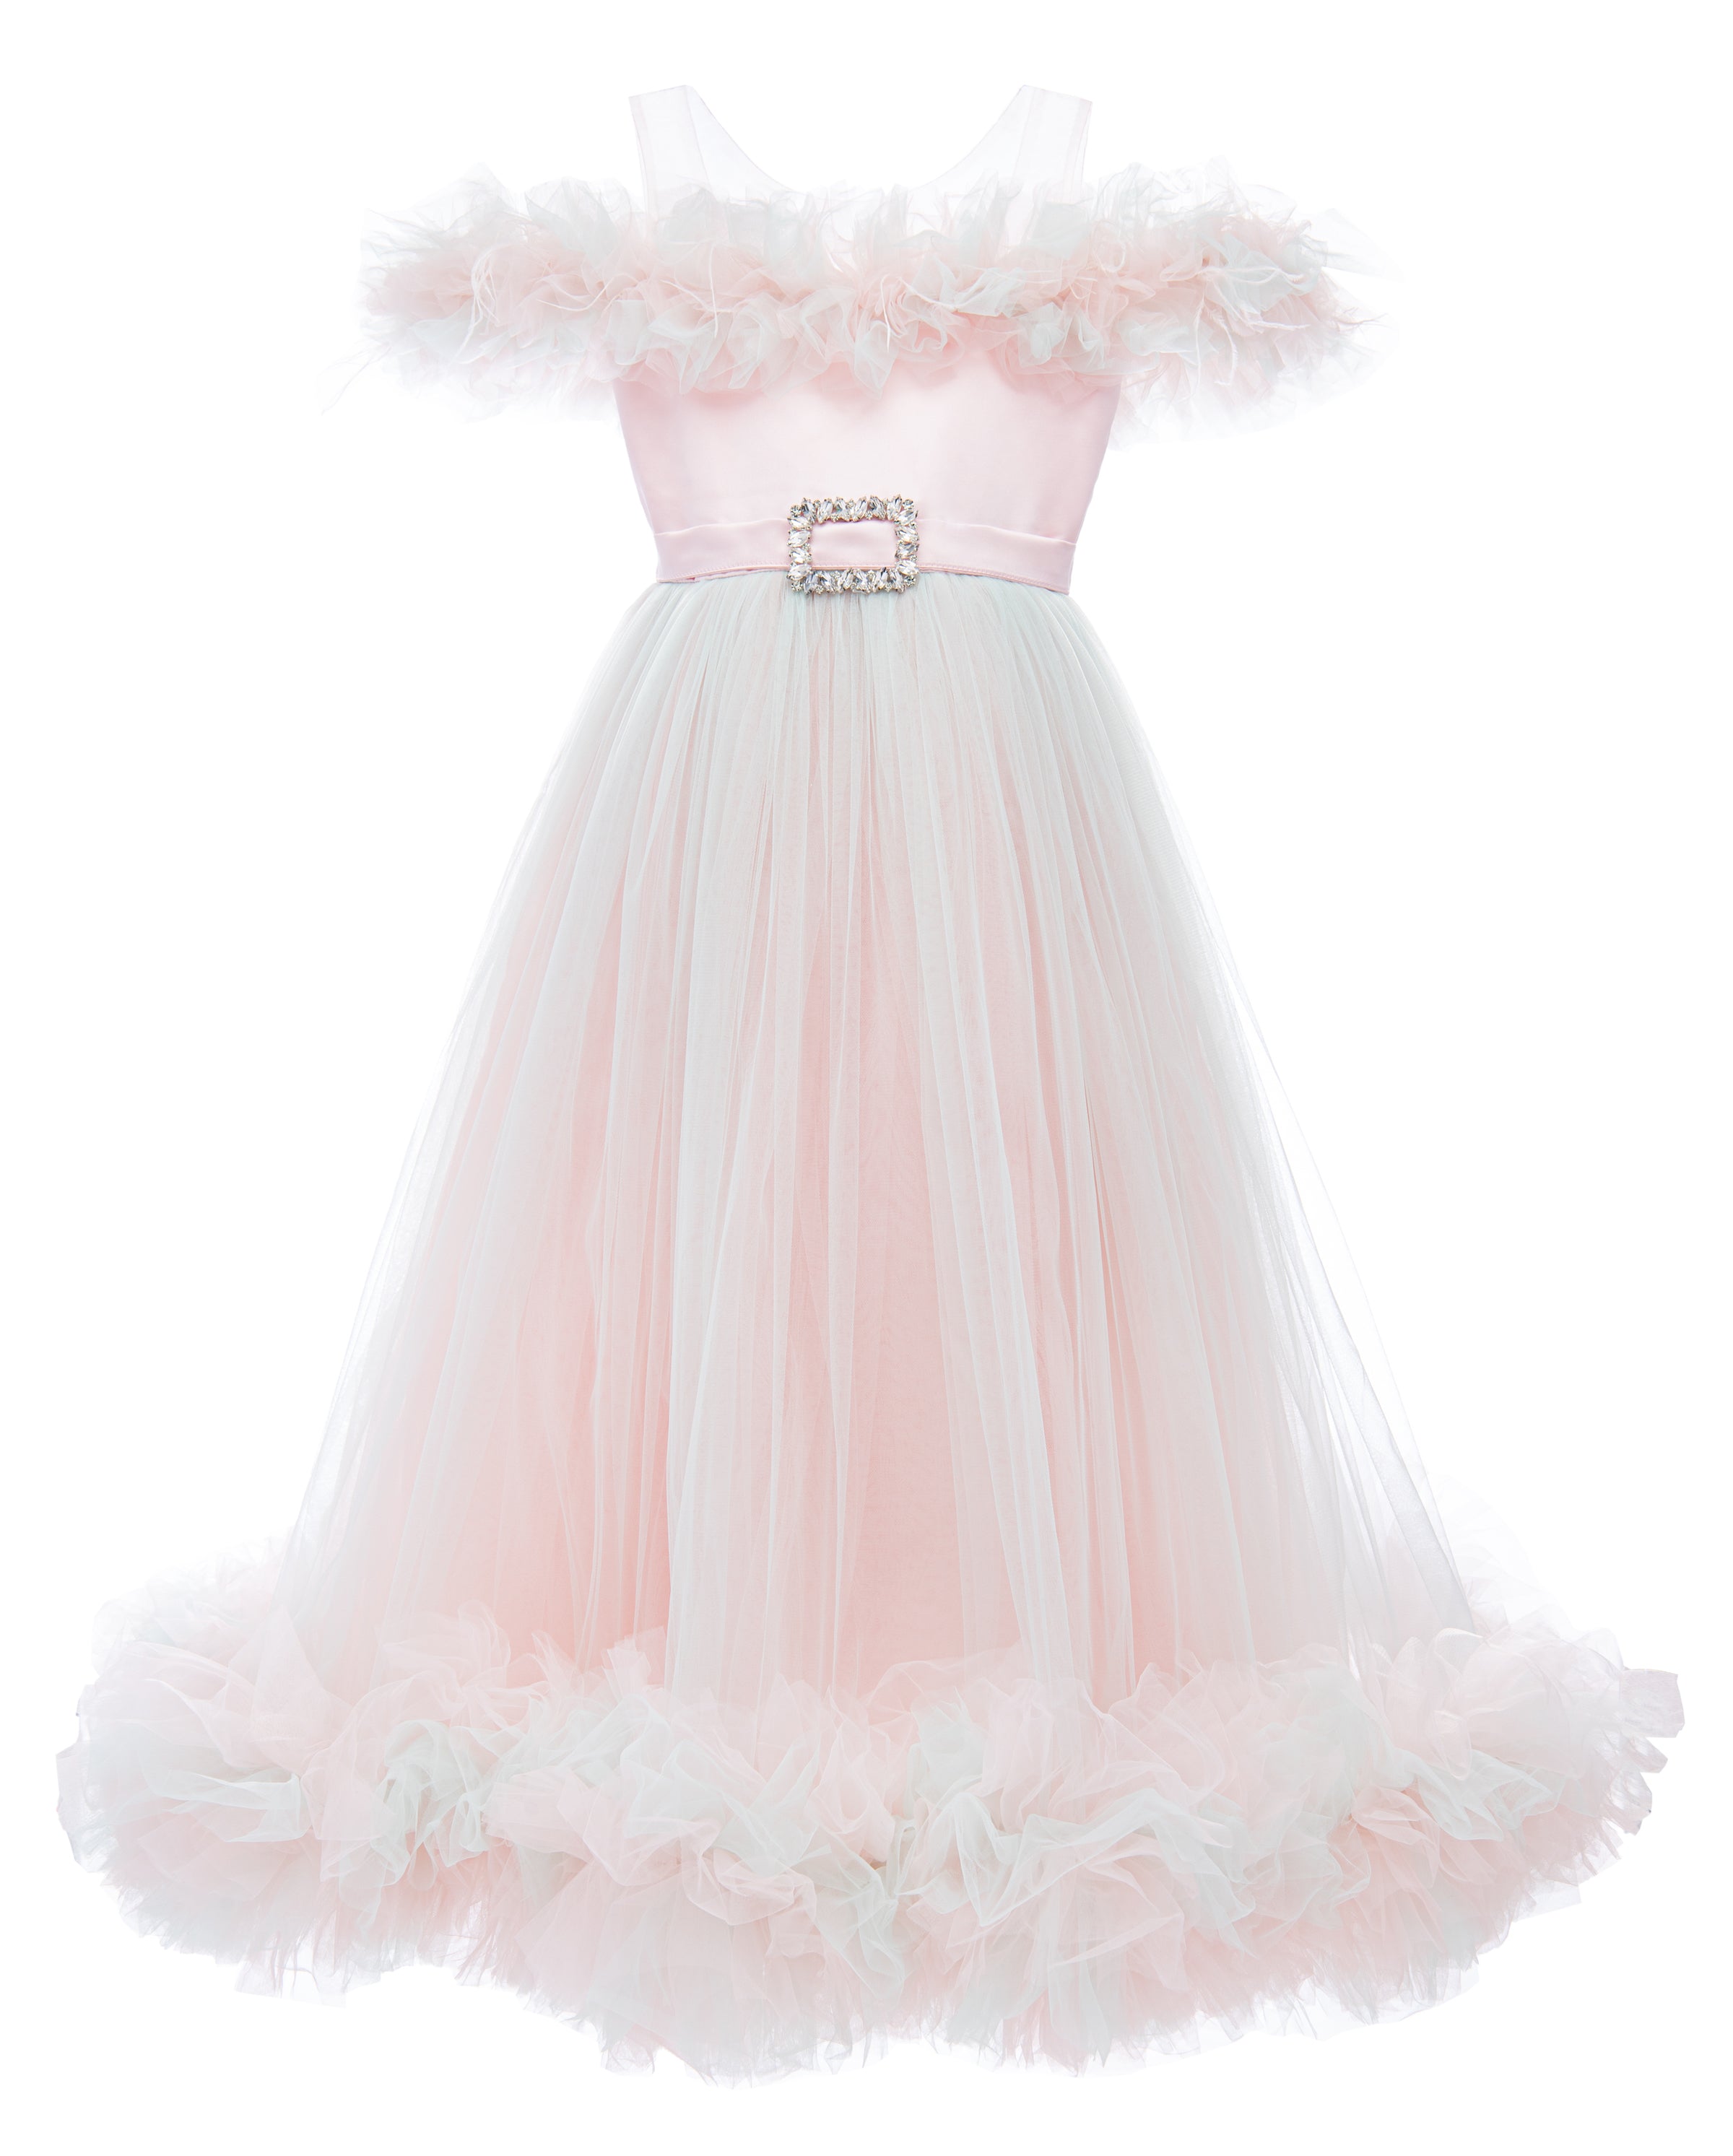 dmfgd baby girl frill dress with| Alibaba.com